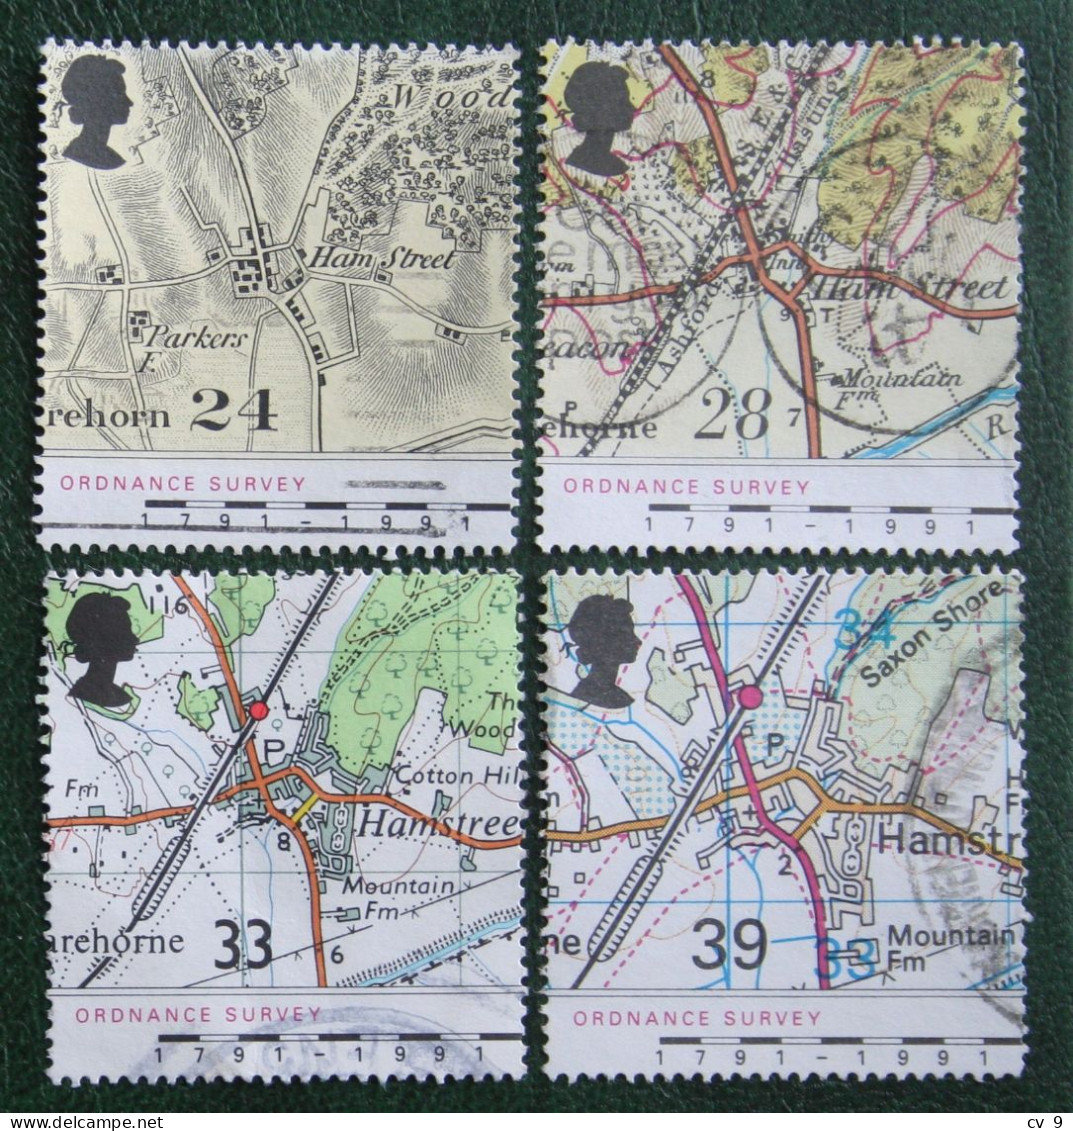 ORDNANCE SURVEY MAPS ANNIVERSARY (Mi 1363-1366) 1991 Used Gebruikt Oblitere ENGLAND GRANDE-BRETAGNE GB GREAT BRITAIN - Used Stamps